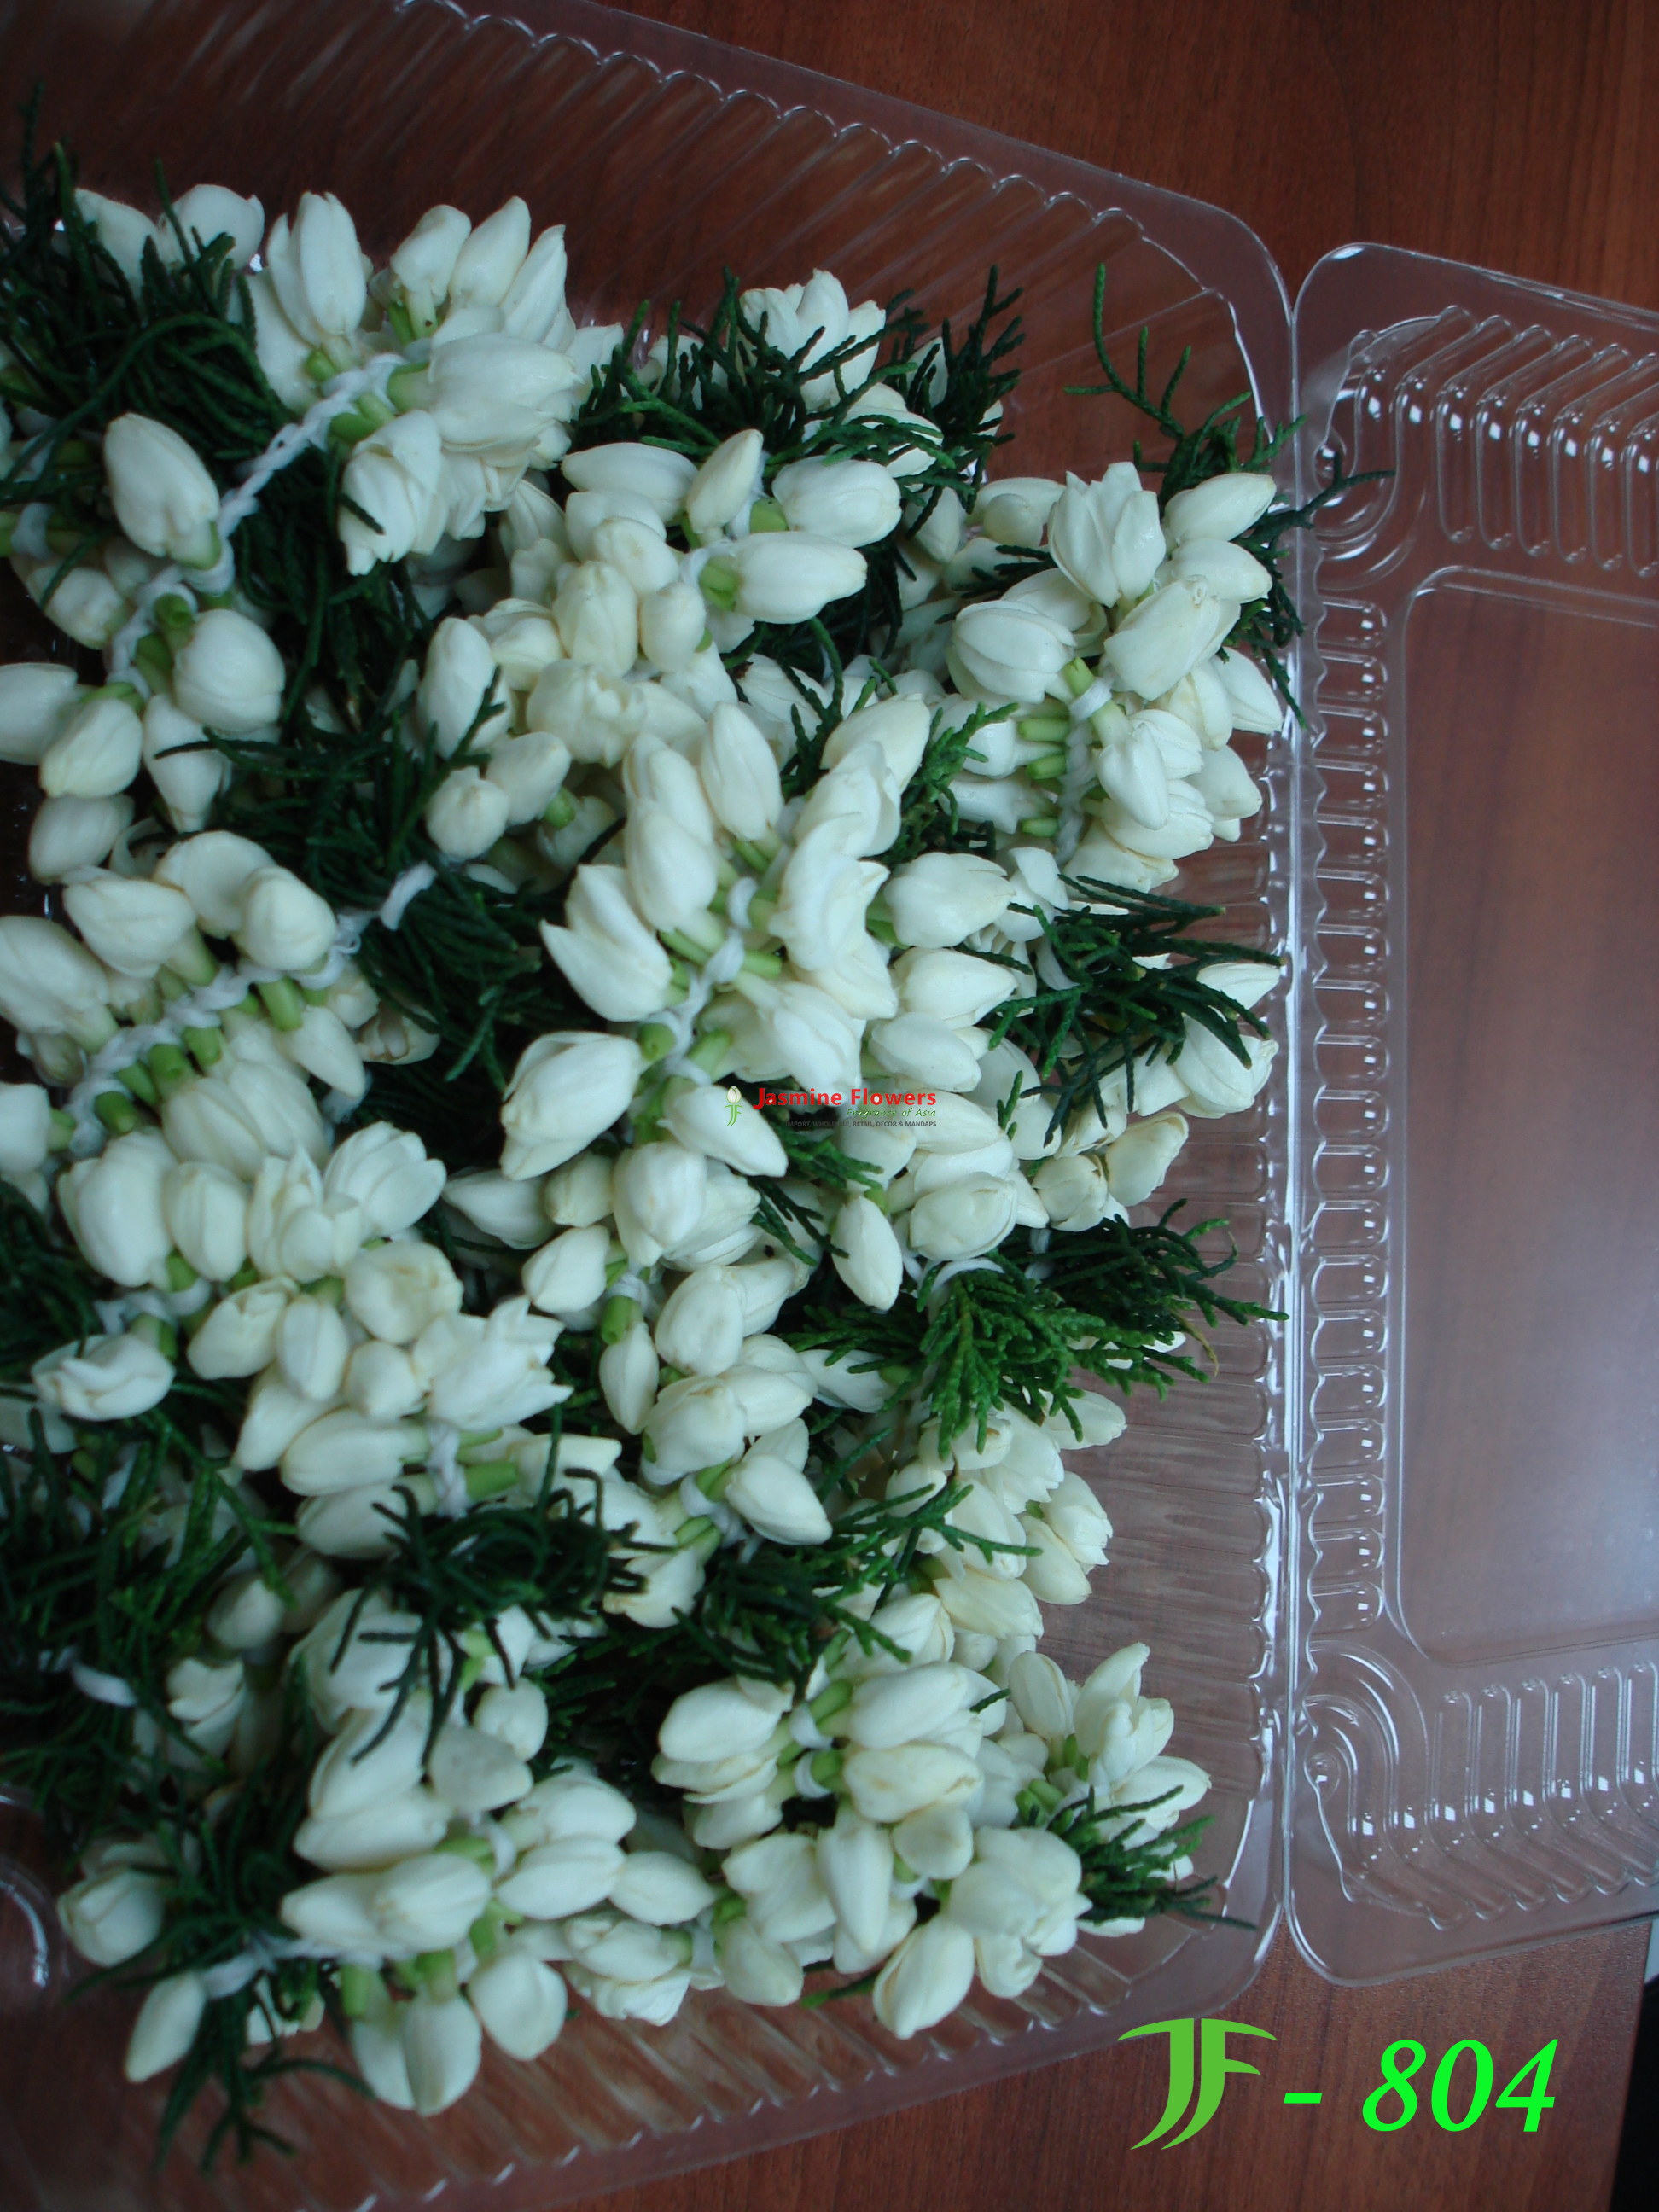 JASMINE & GREEN SPECIAL – Jasmine flowers